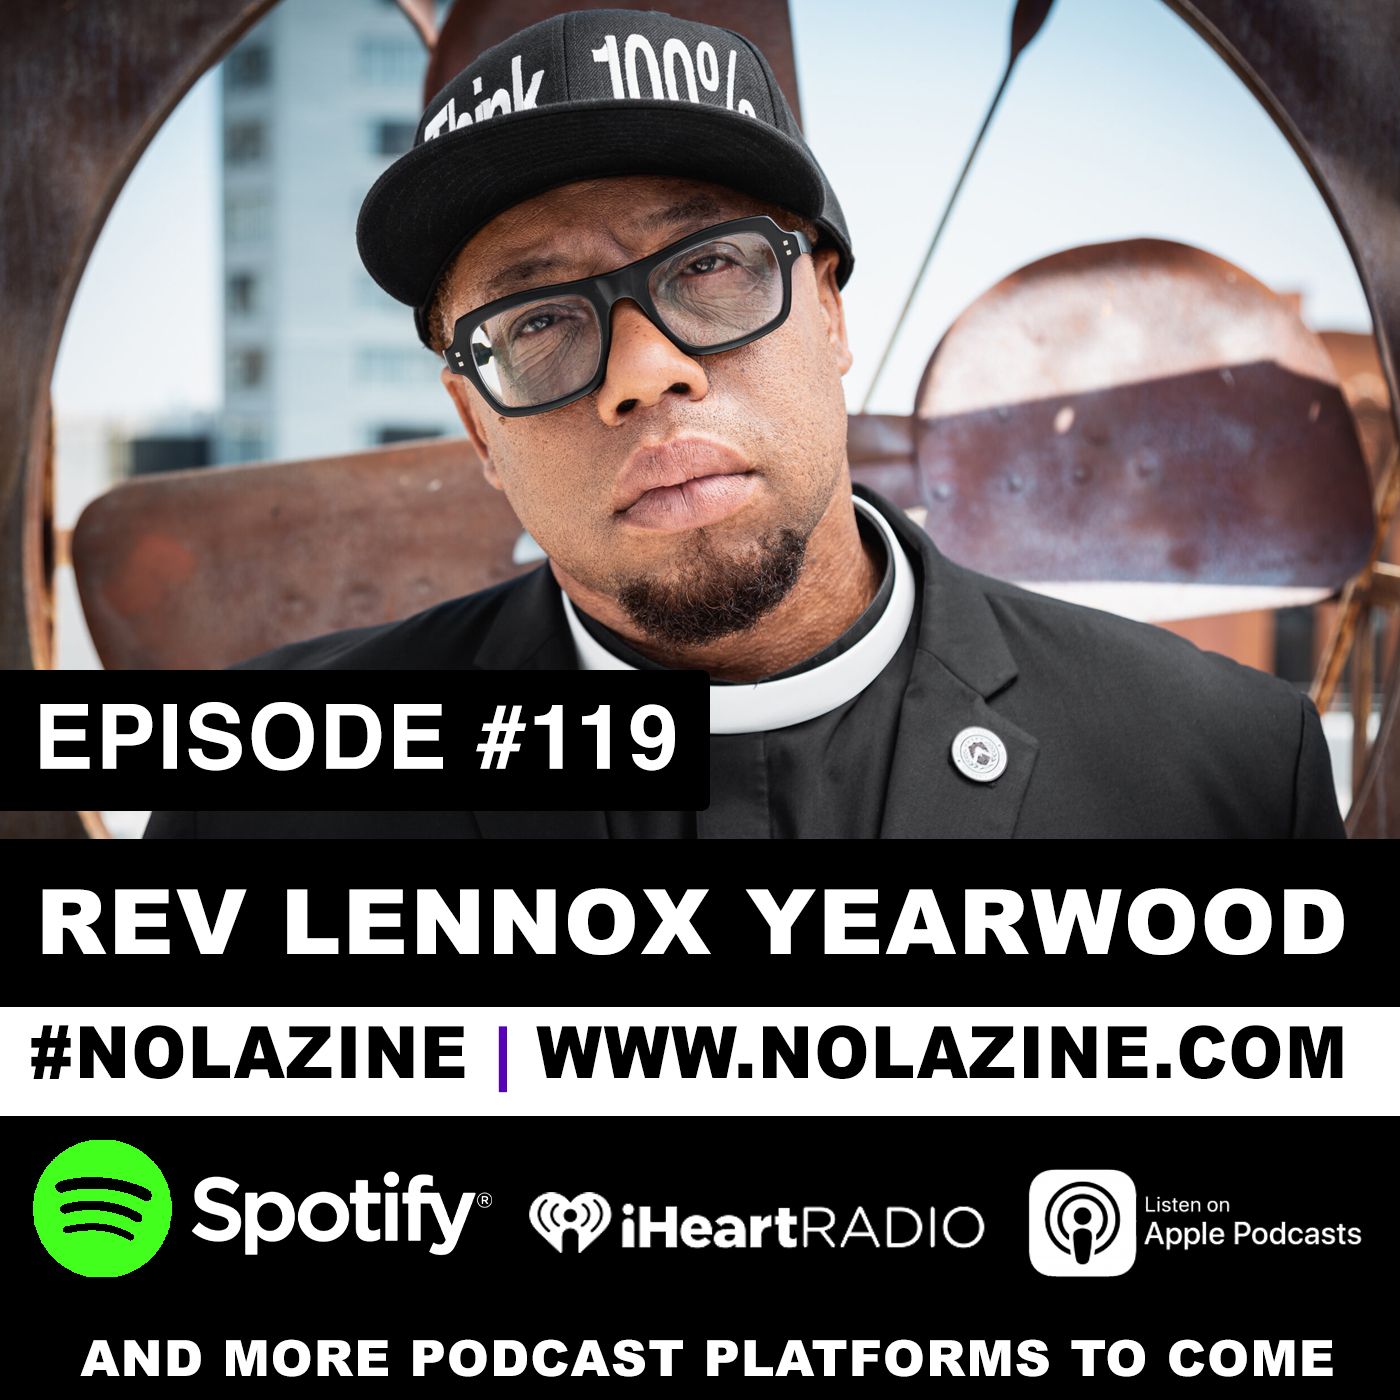 EP: 119 Featuring Rev Lennox Yearwood